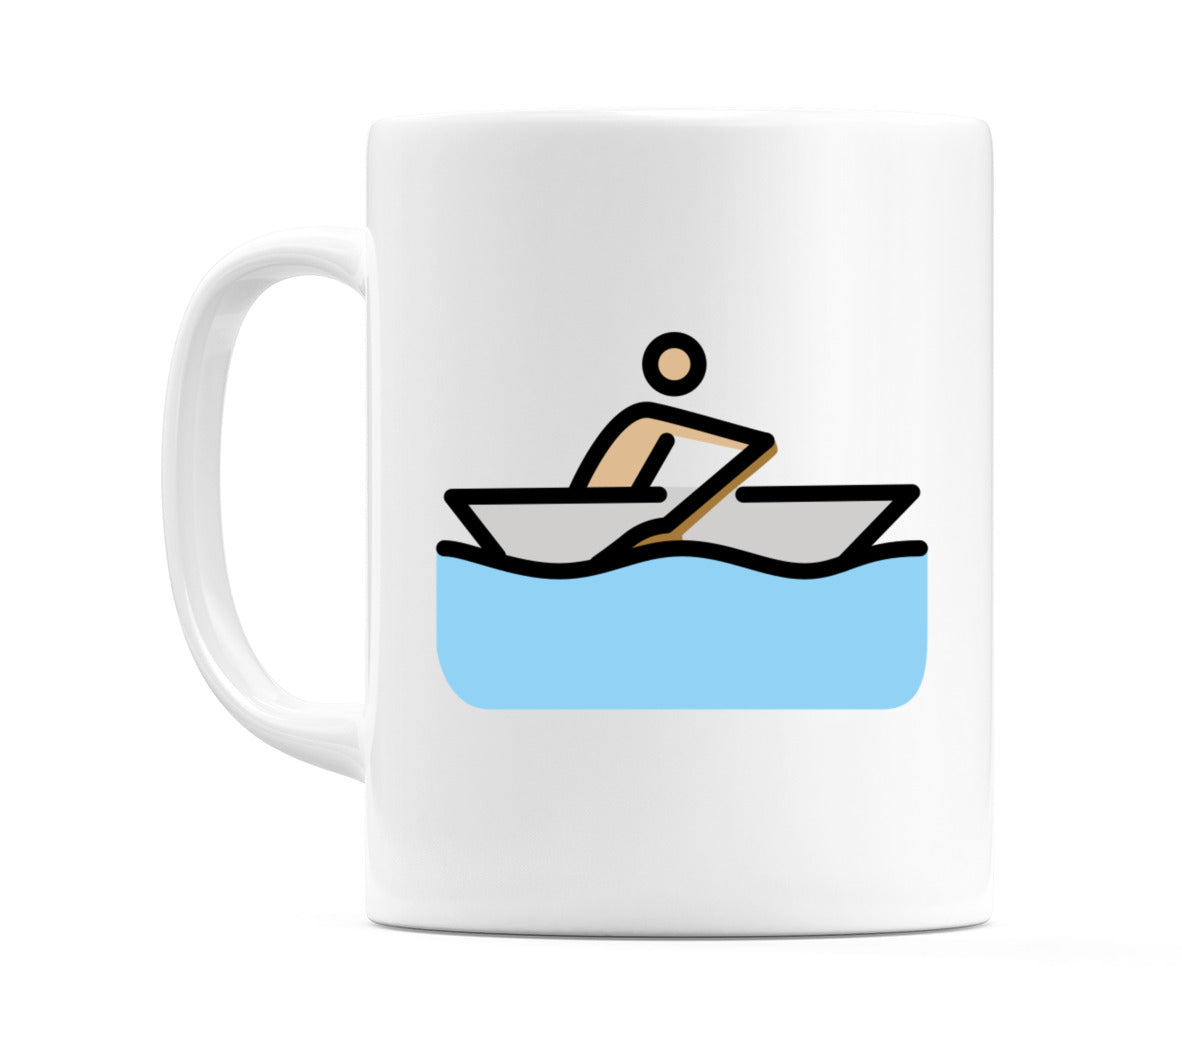 Male Rowing Boat: Medium-Light Skin Tone Emoji Mug